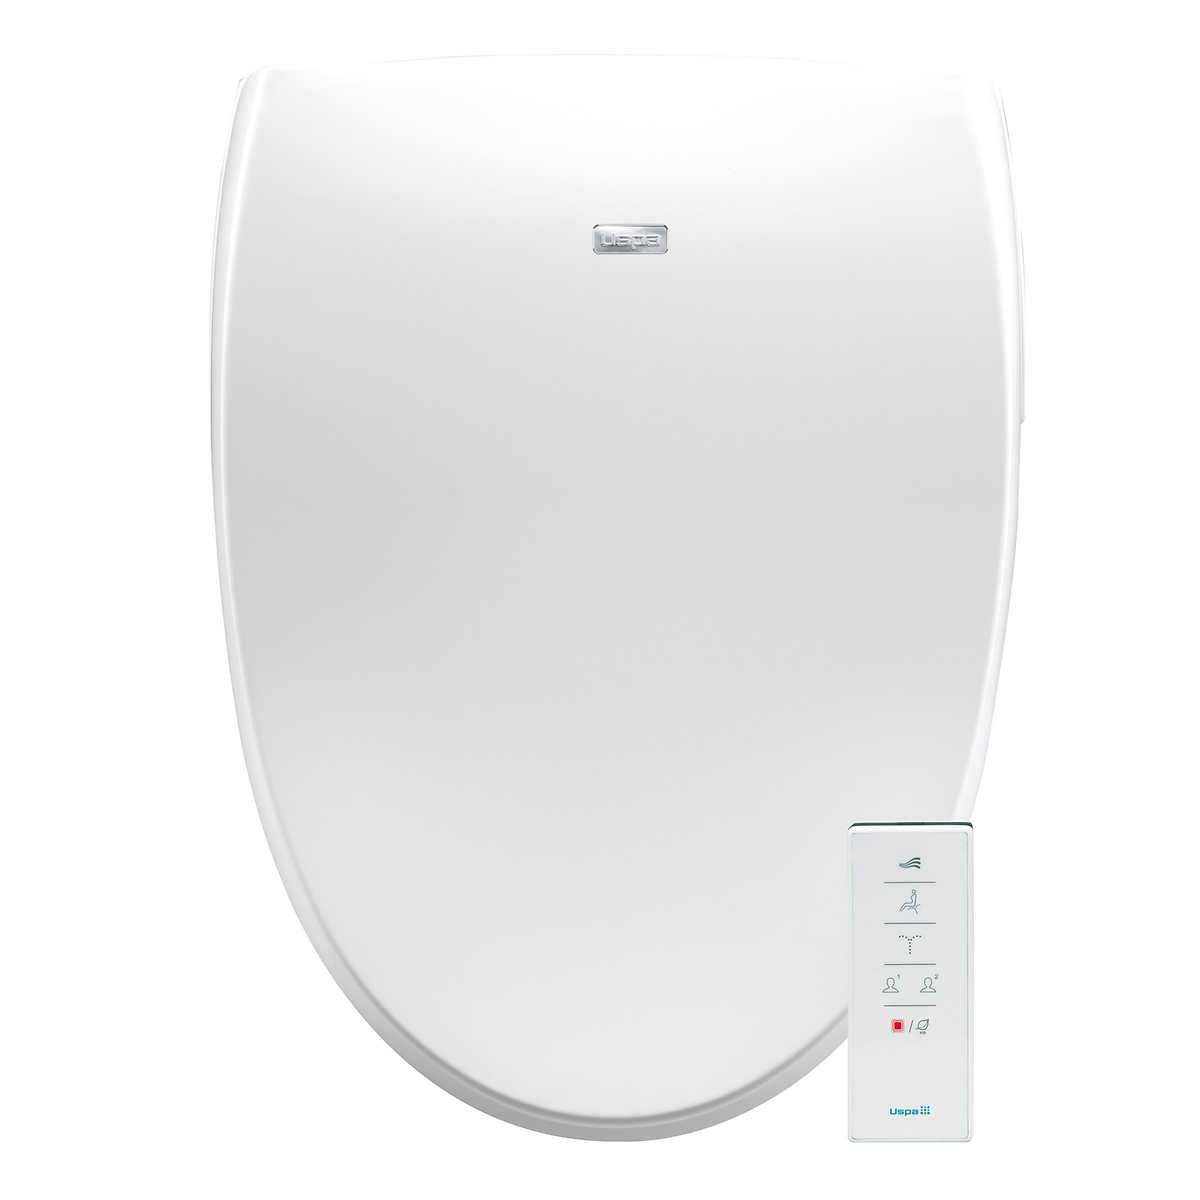 Bio Bidet A8 Serenity Smart Bidet Toilet Seat for $249.99 Shipped